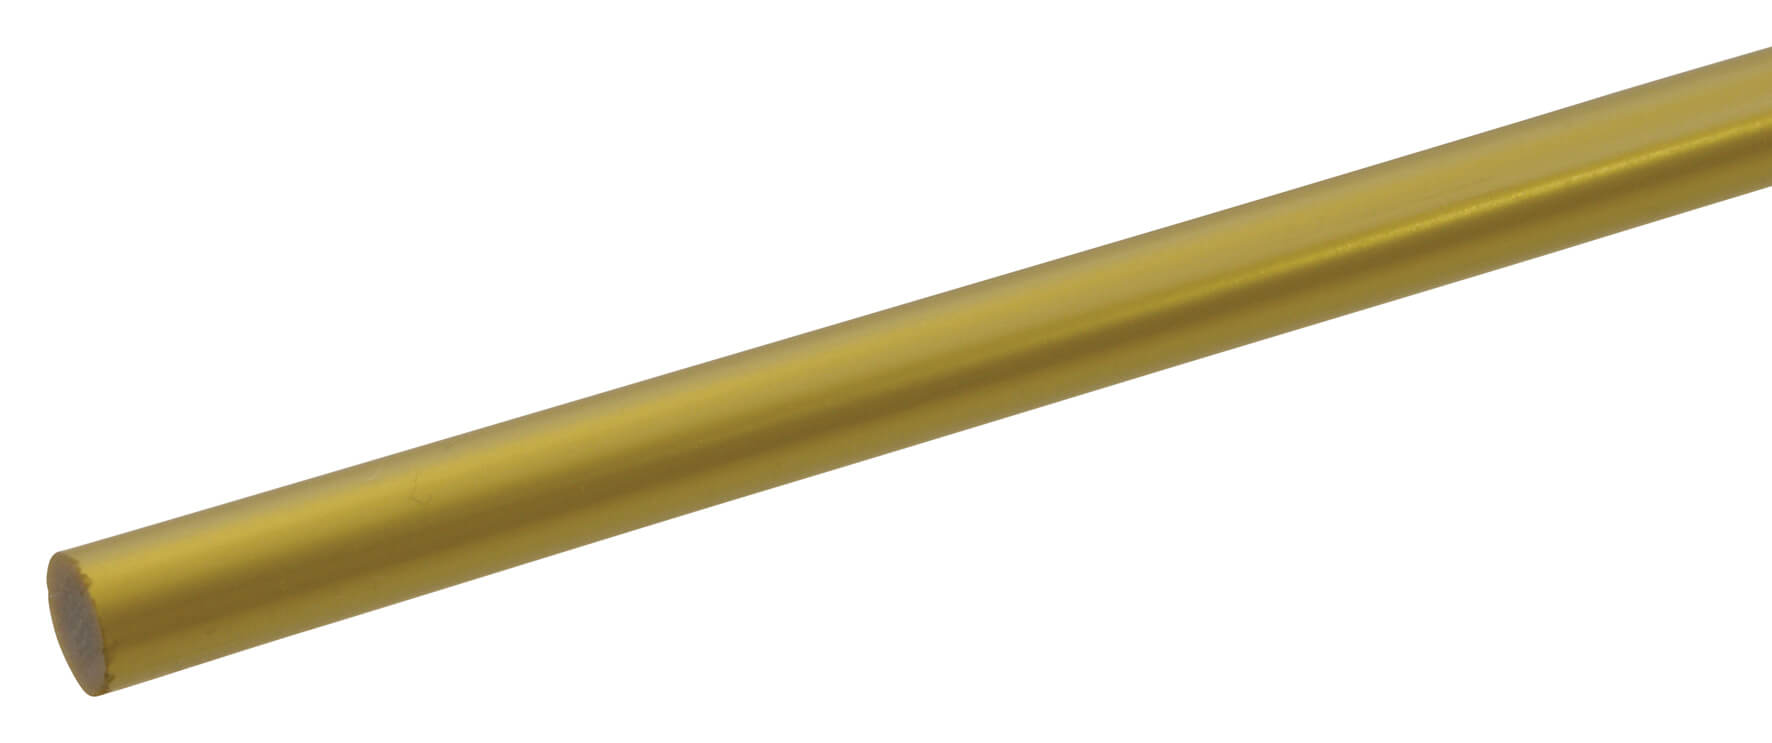 Metalic Acrylic Rod 6.4mm x 610mm - Solid Gold